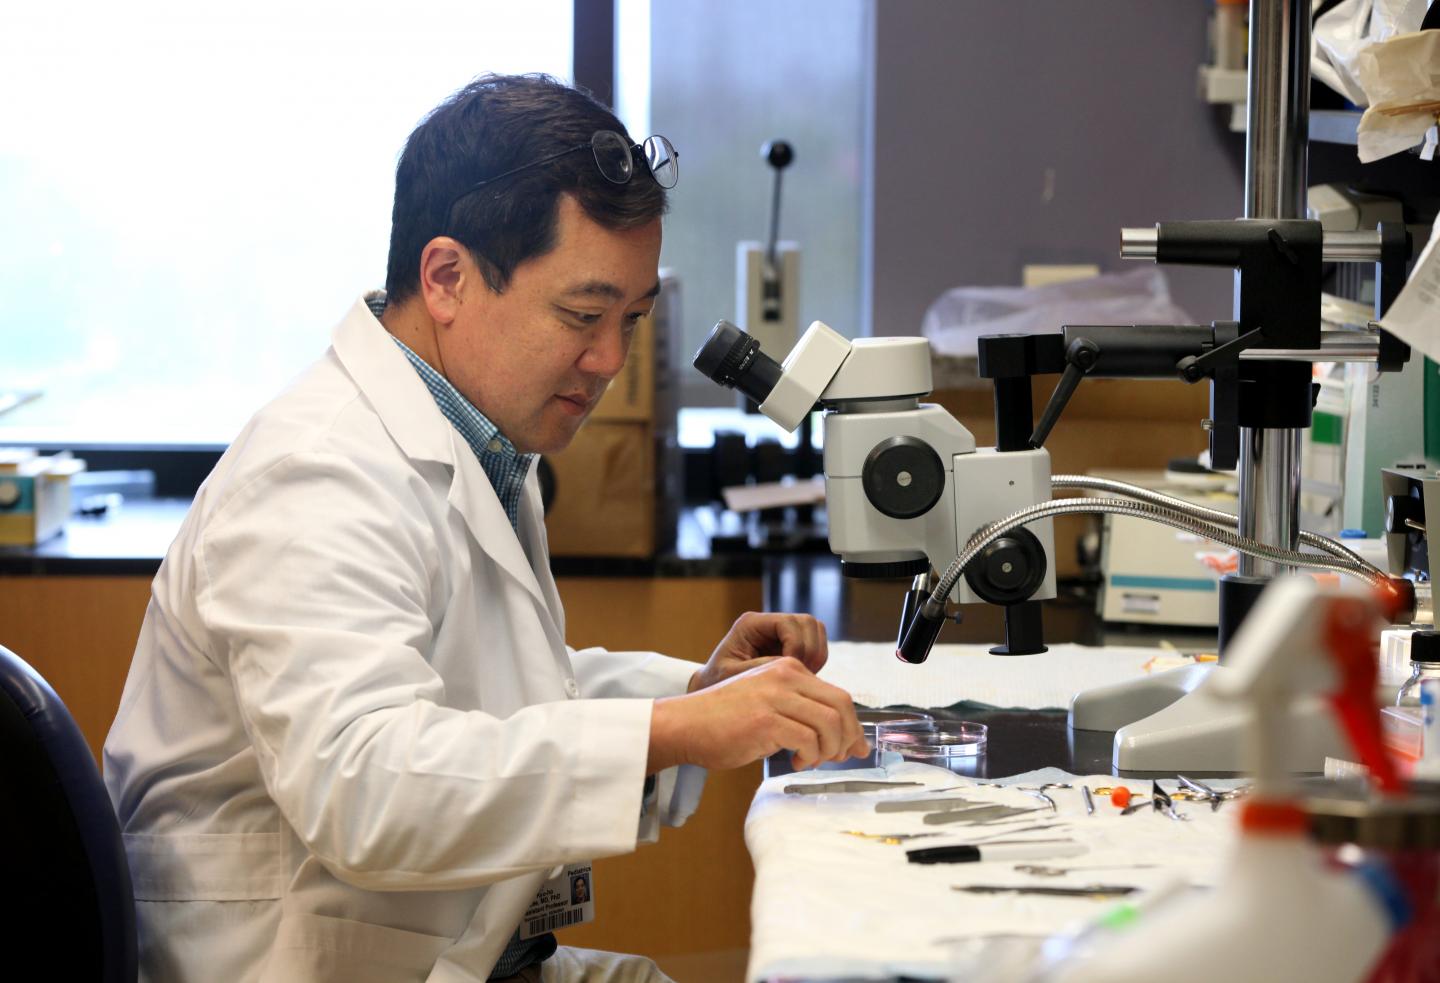 Dr. Kyu-Ho Lee of the Medical University of South Carolina